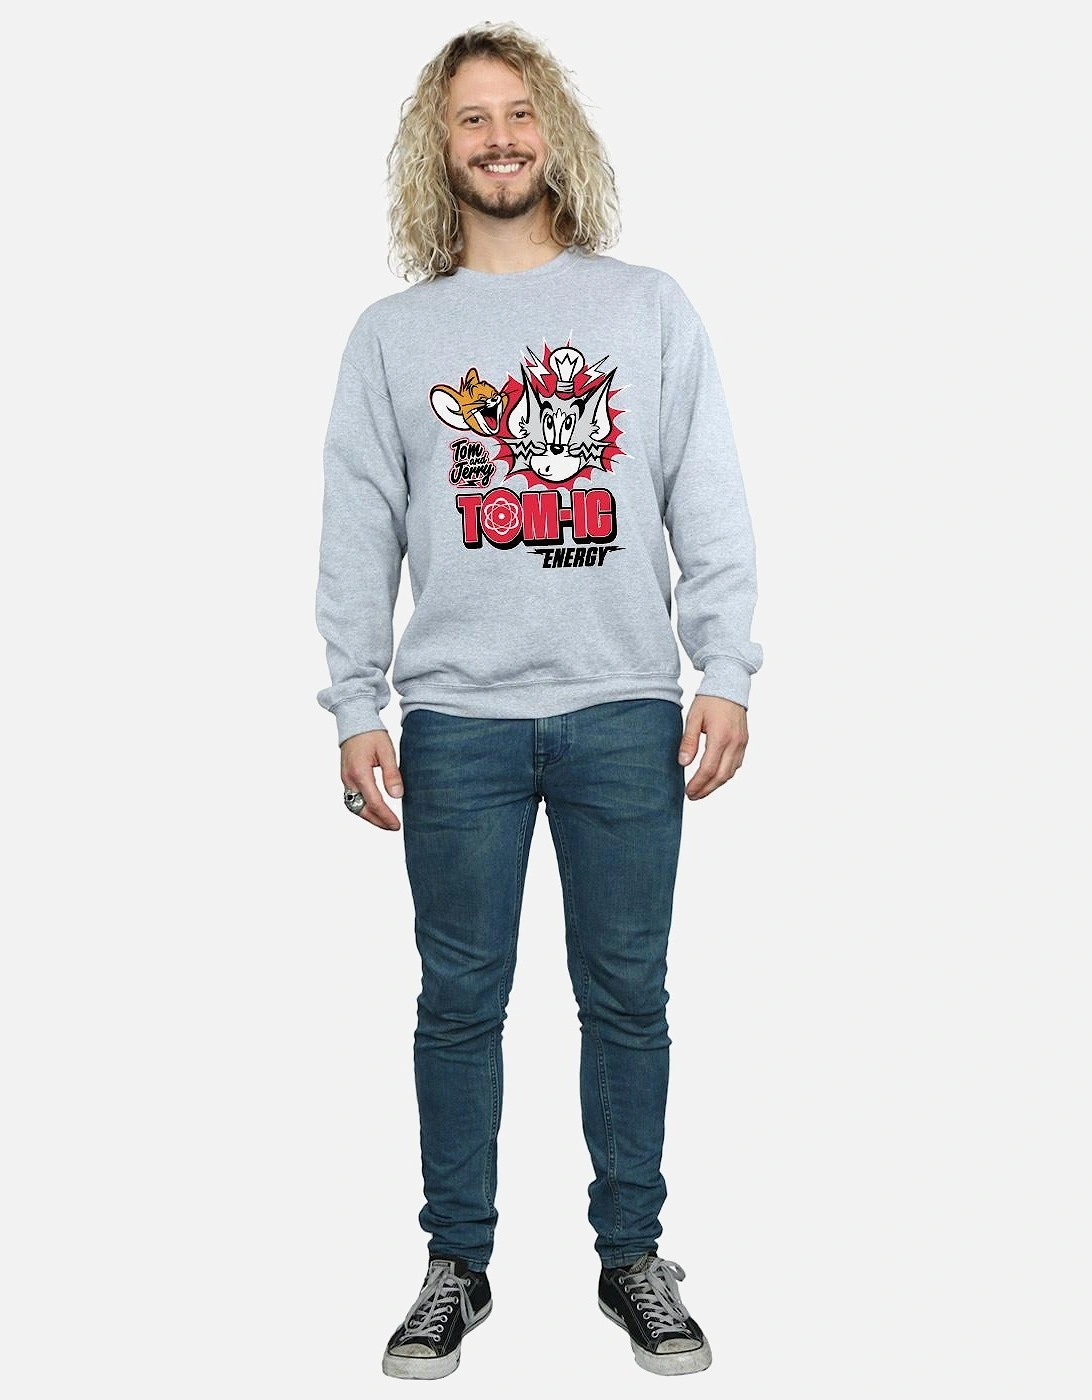 Tom And Jerry Mens Tomic Energy Sweatshirt